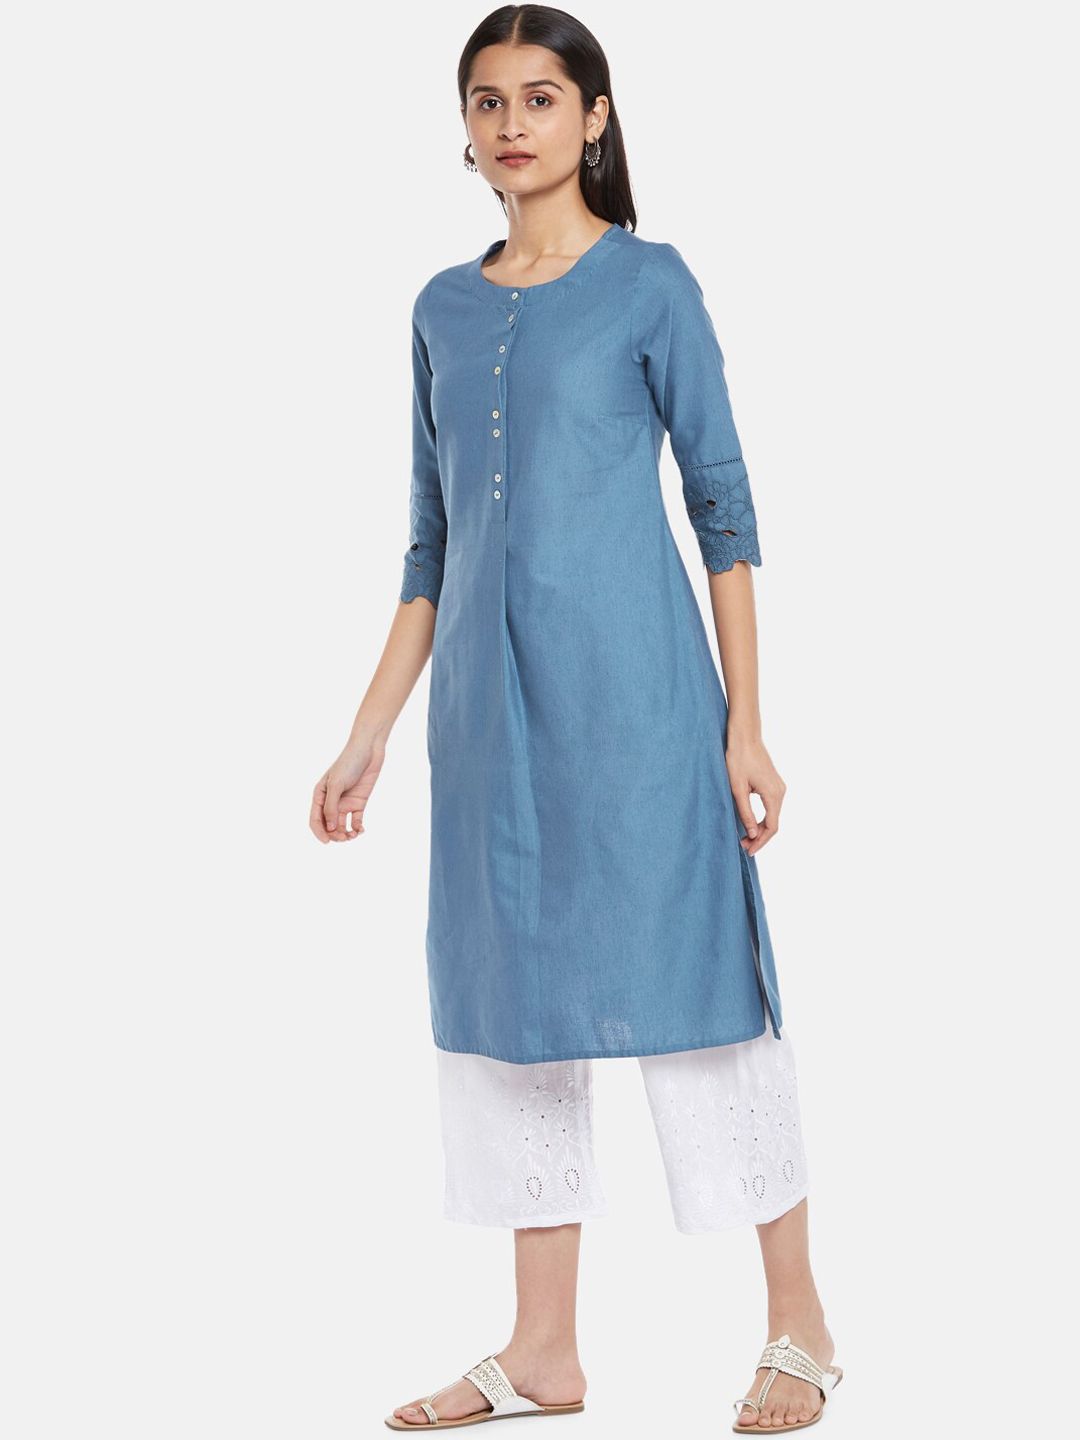 RANGMANCH BY PANTALOONS Women Blue Striped Thread Work Kurta Price in India